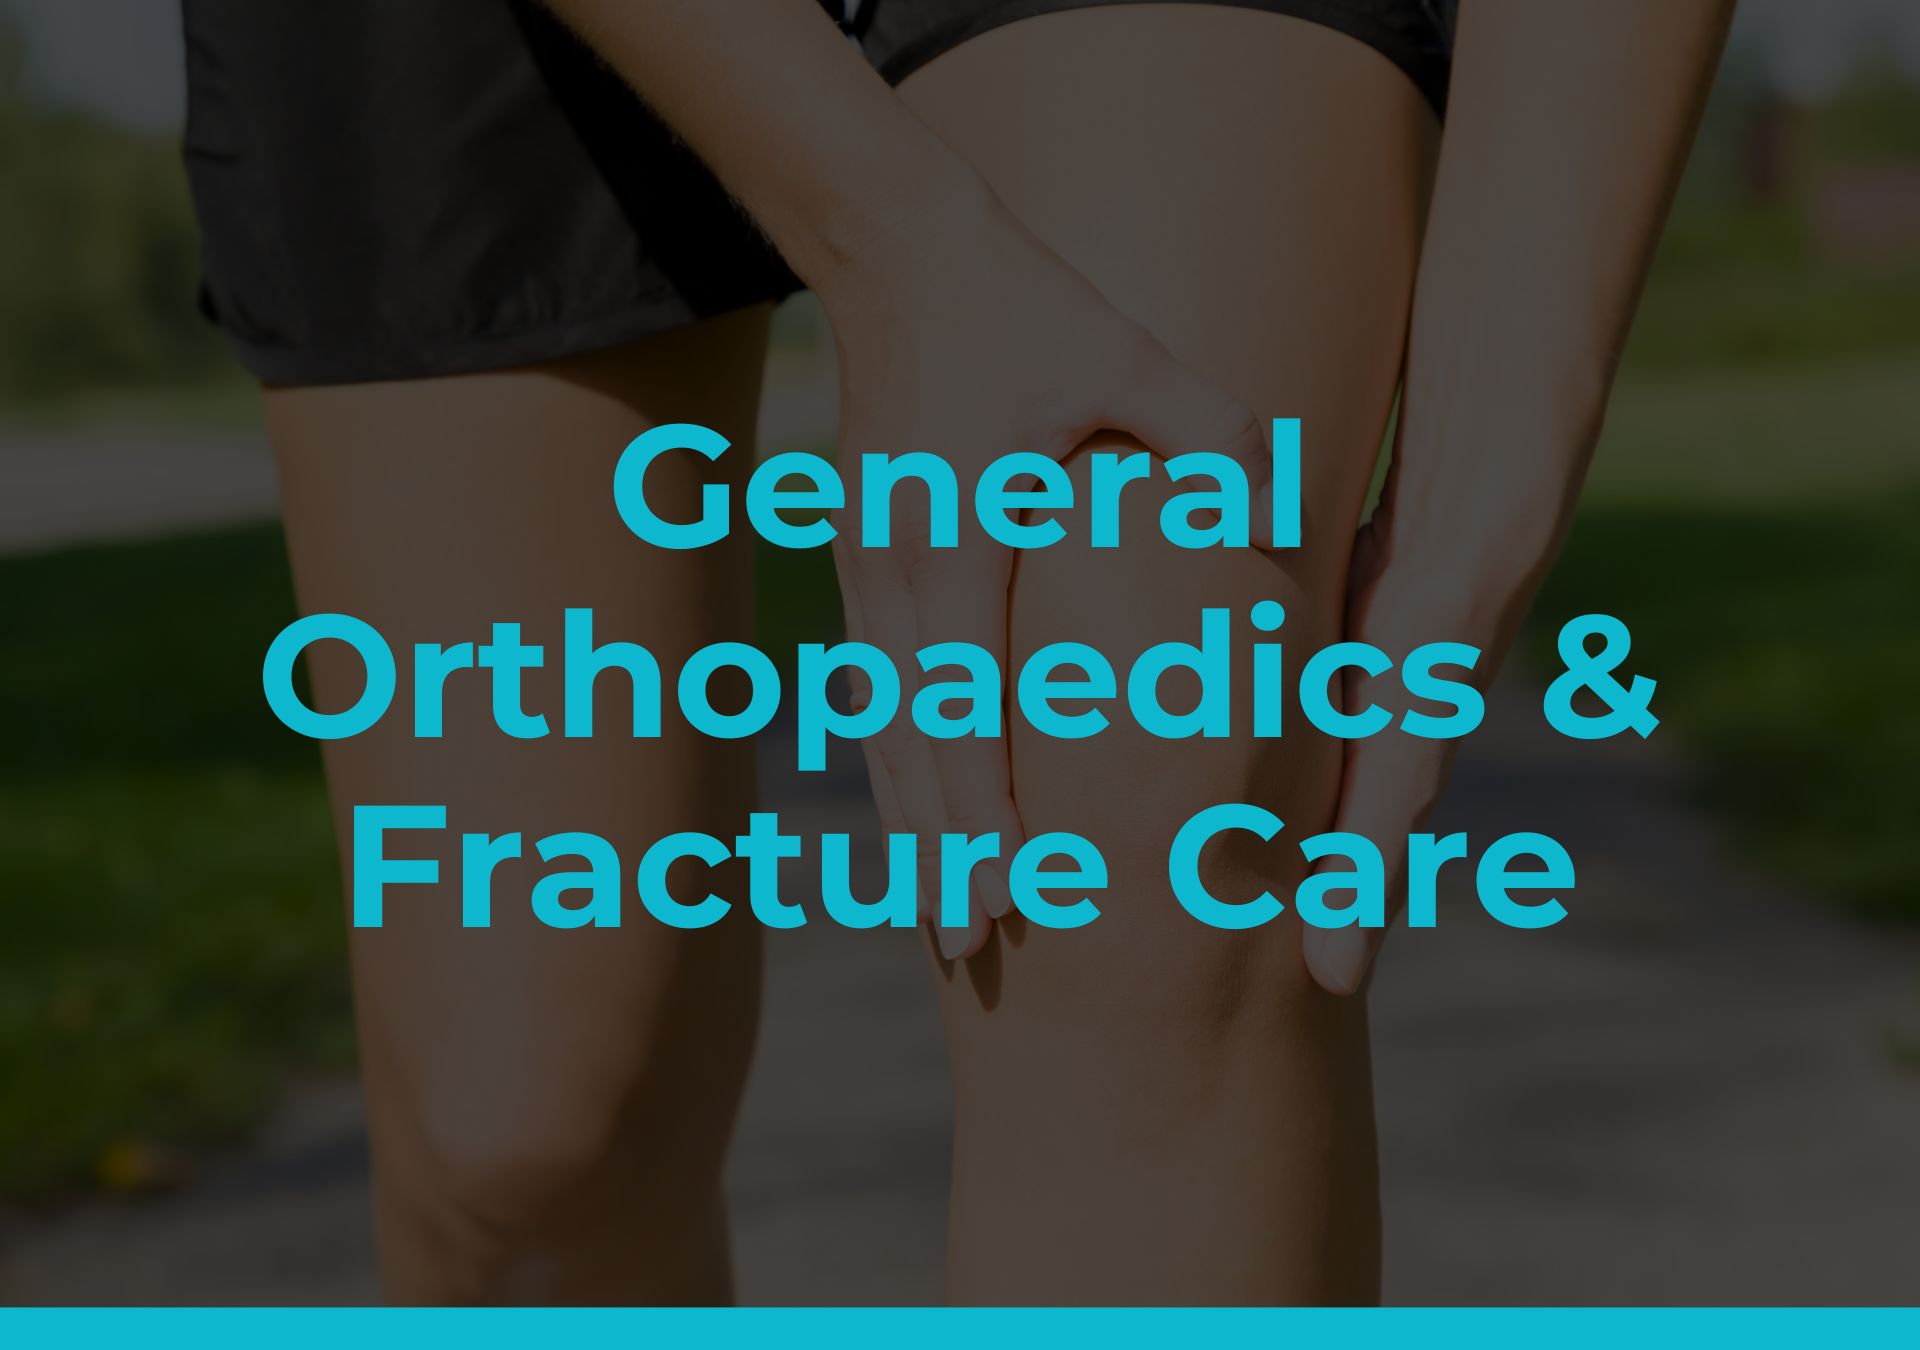 General Orthopaedics & Fracture Care